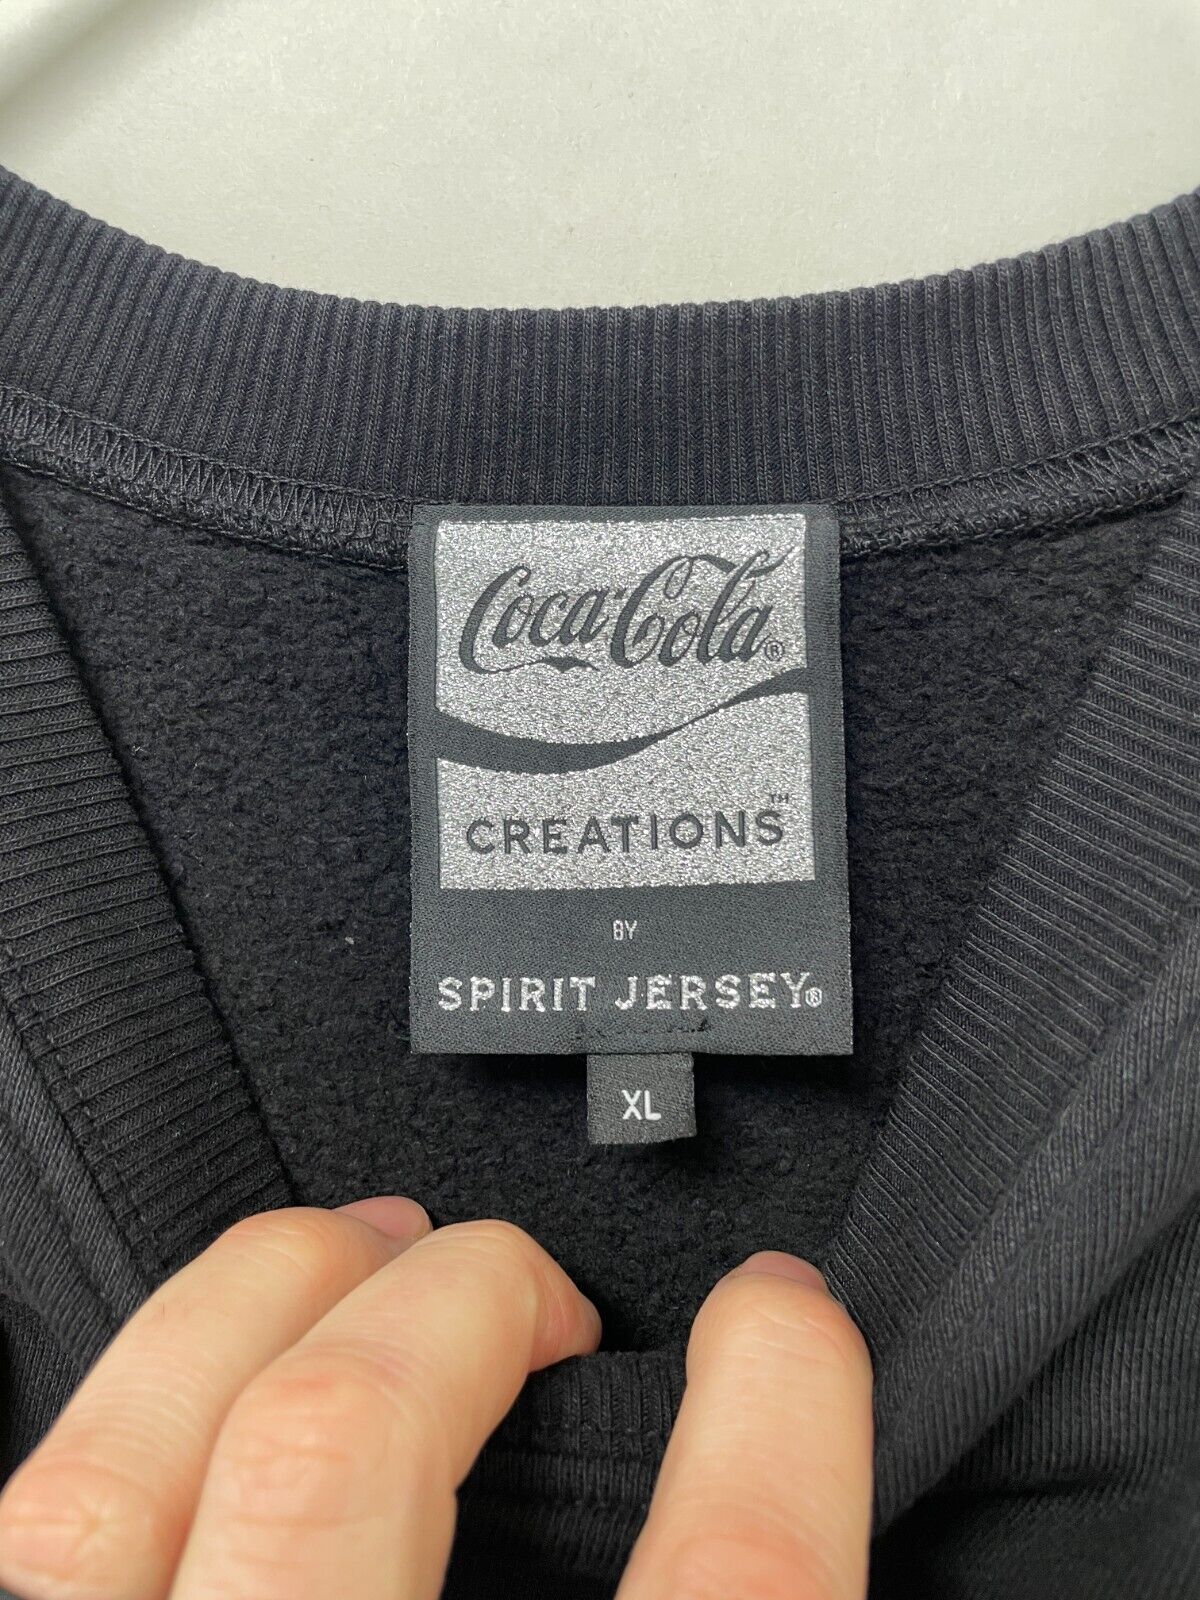 Coca-Cola Creations Spirit Jersey Mens XL Starlight Galaxy Sweatshirt F12672589